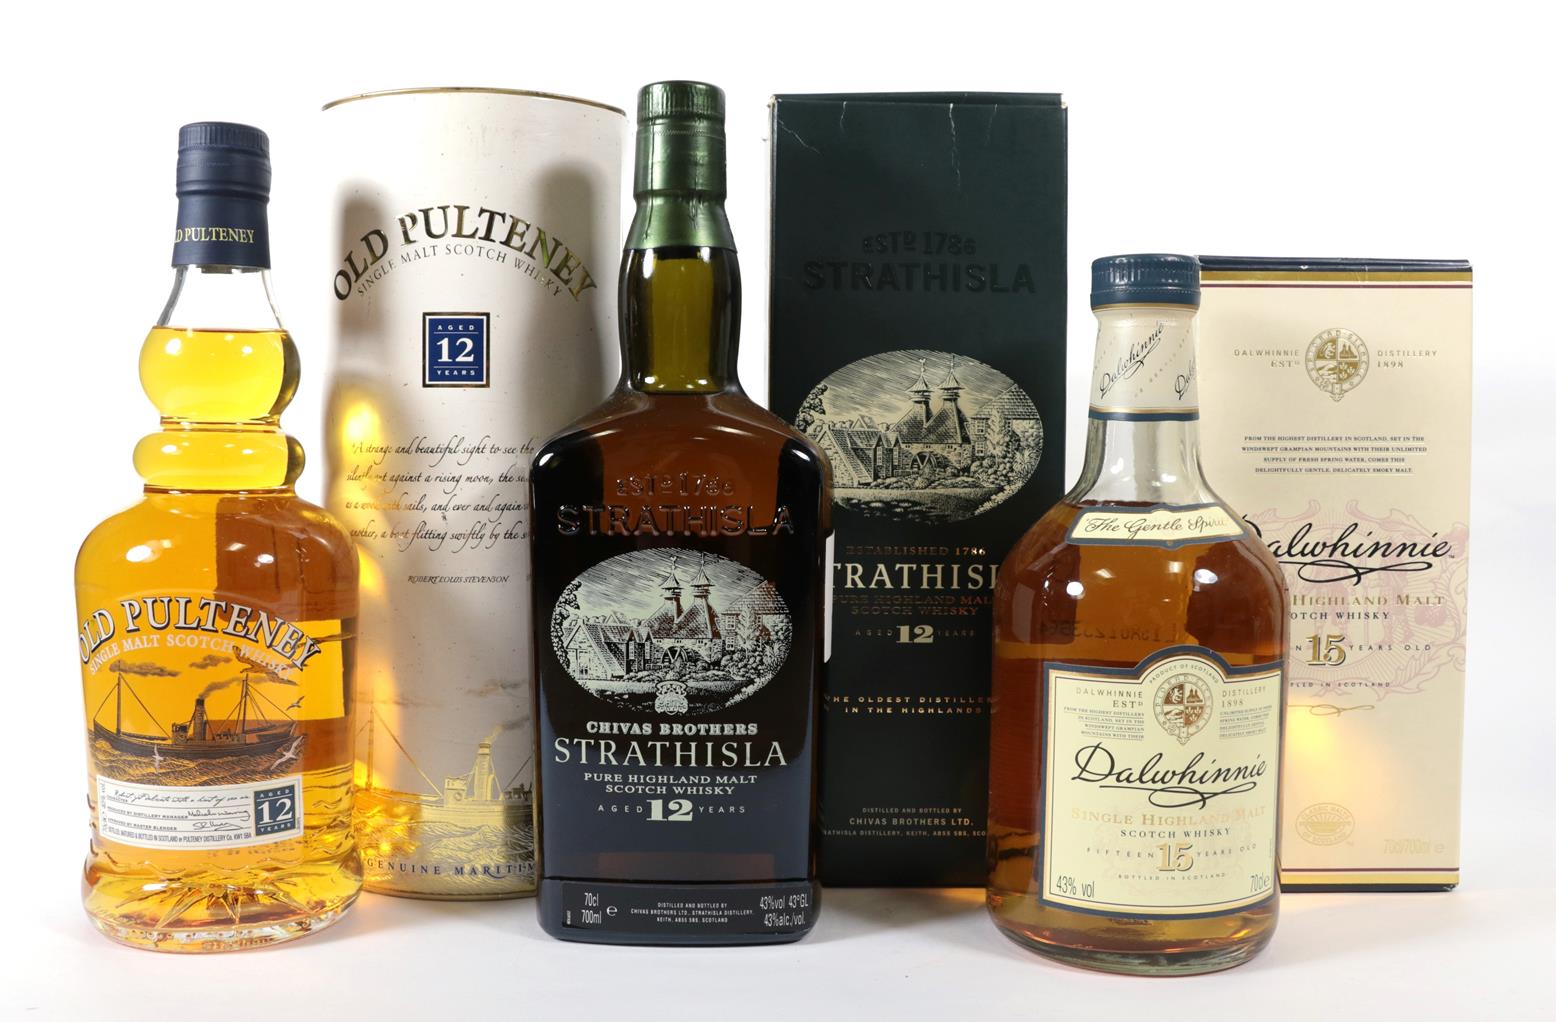 Strathisla 12 Years Old Pure Highland Malt Scotch Whisky, 70cl 43% vol, in original cardboard sleeve